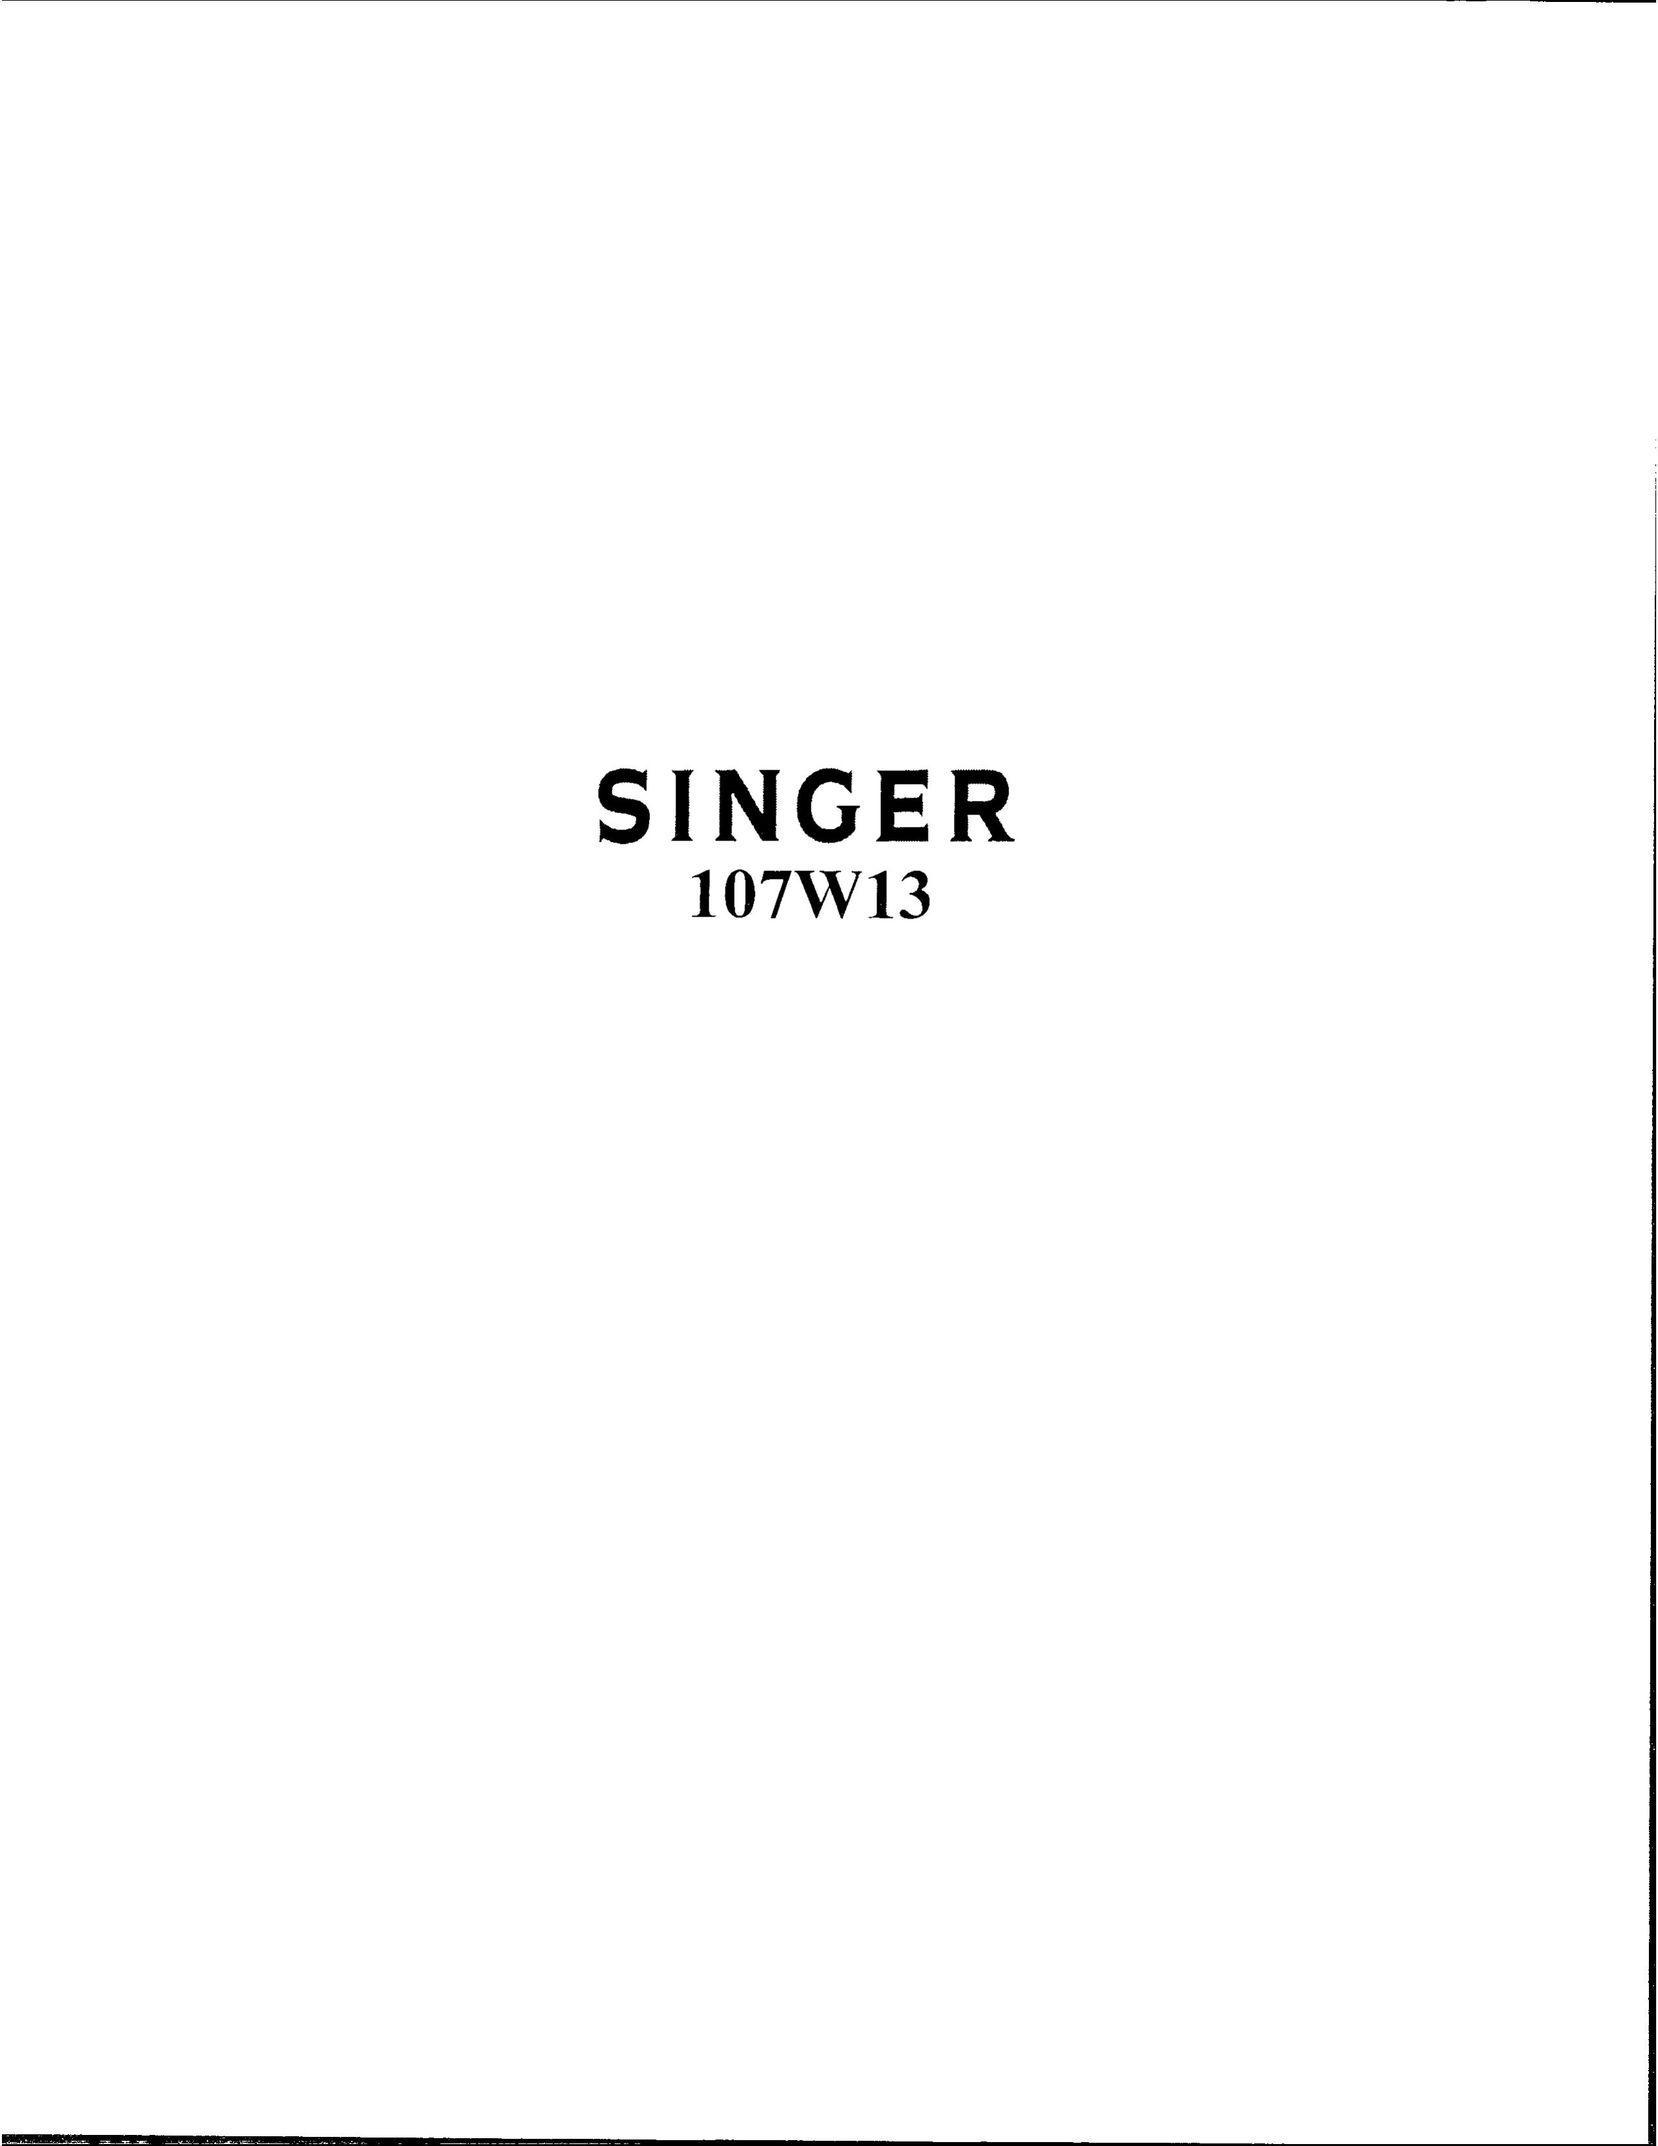 Singer 107W13 Sewing Machine User Manual (Page 1)